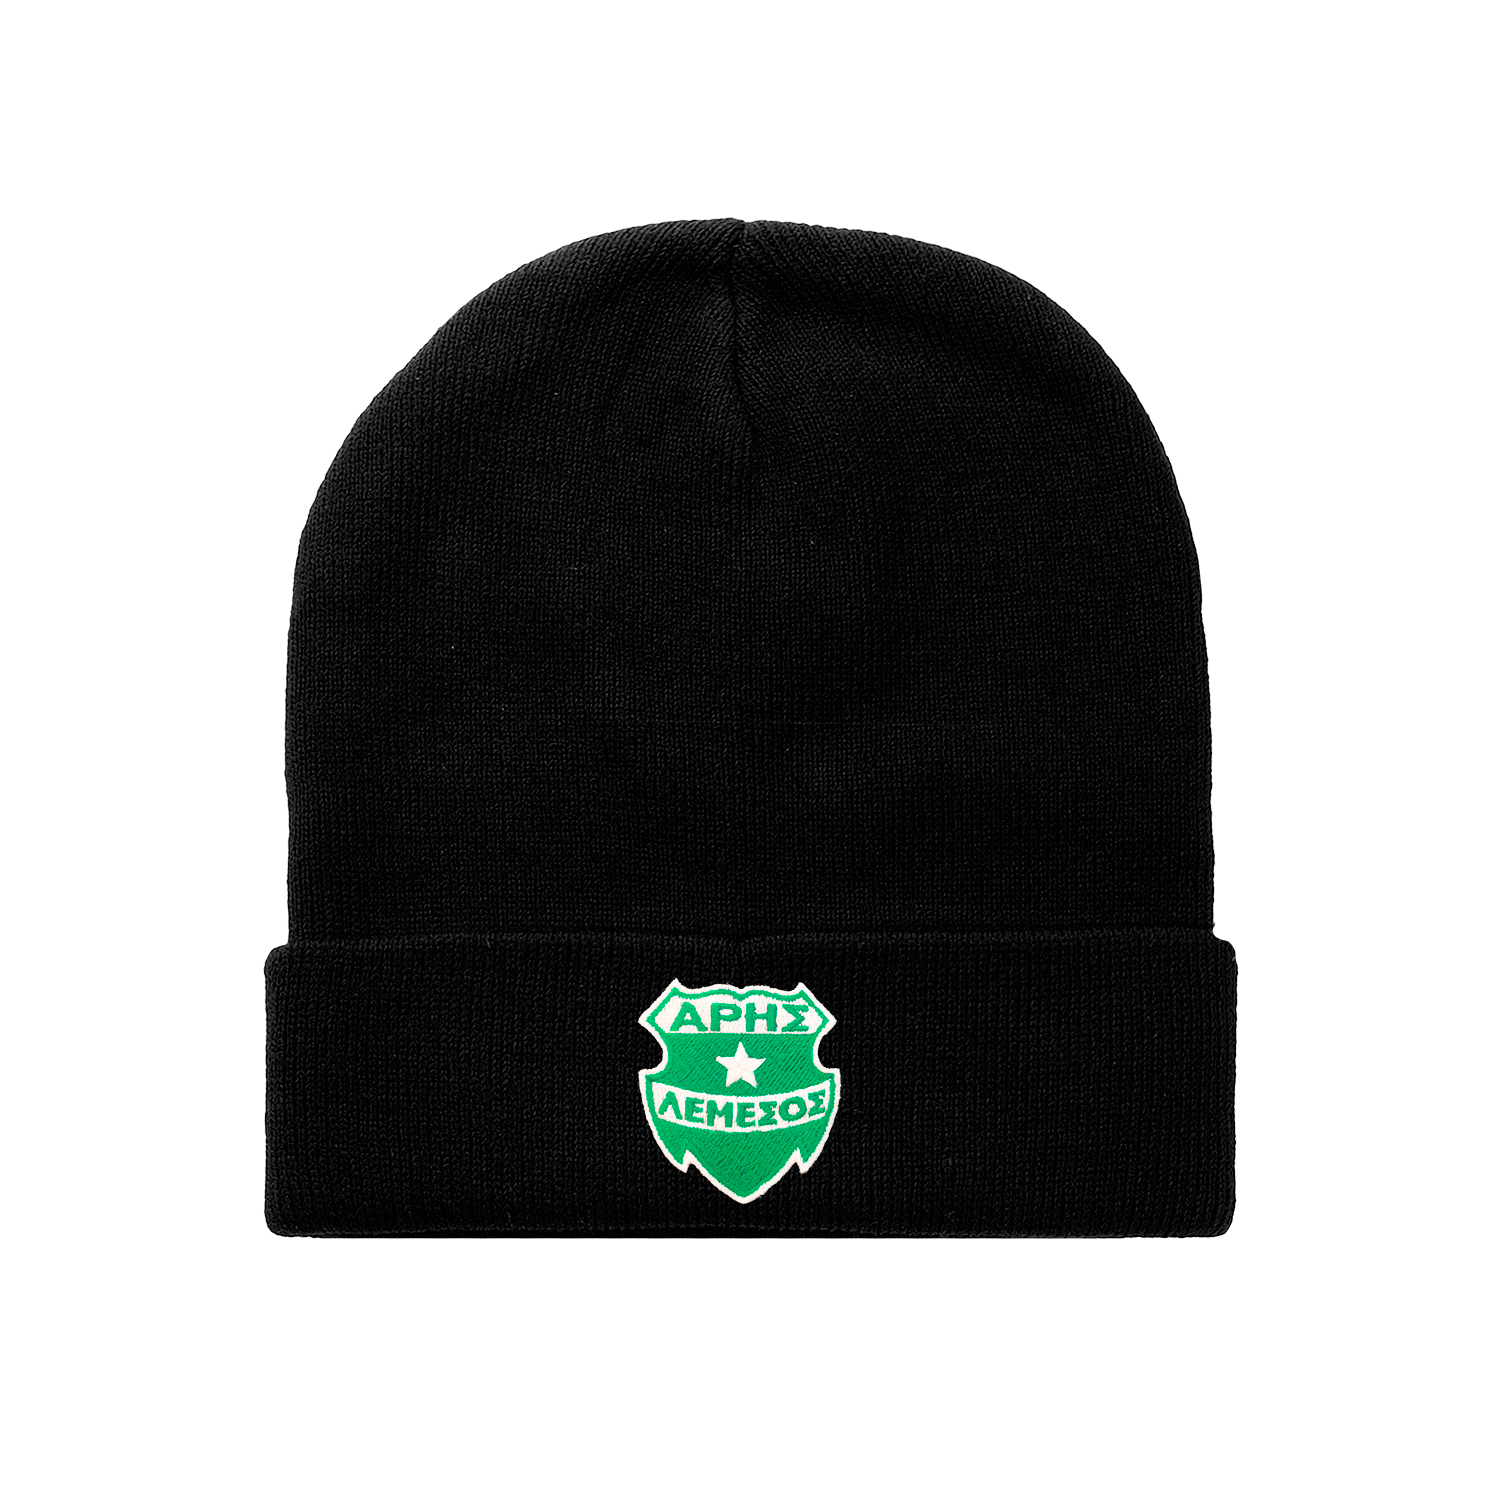 Winter hat black Aris logo 